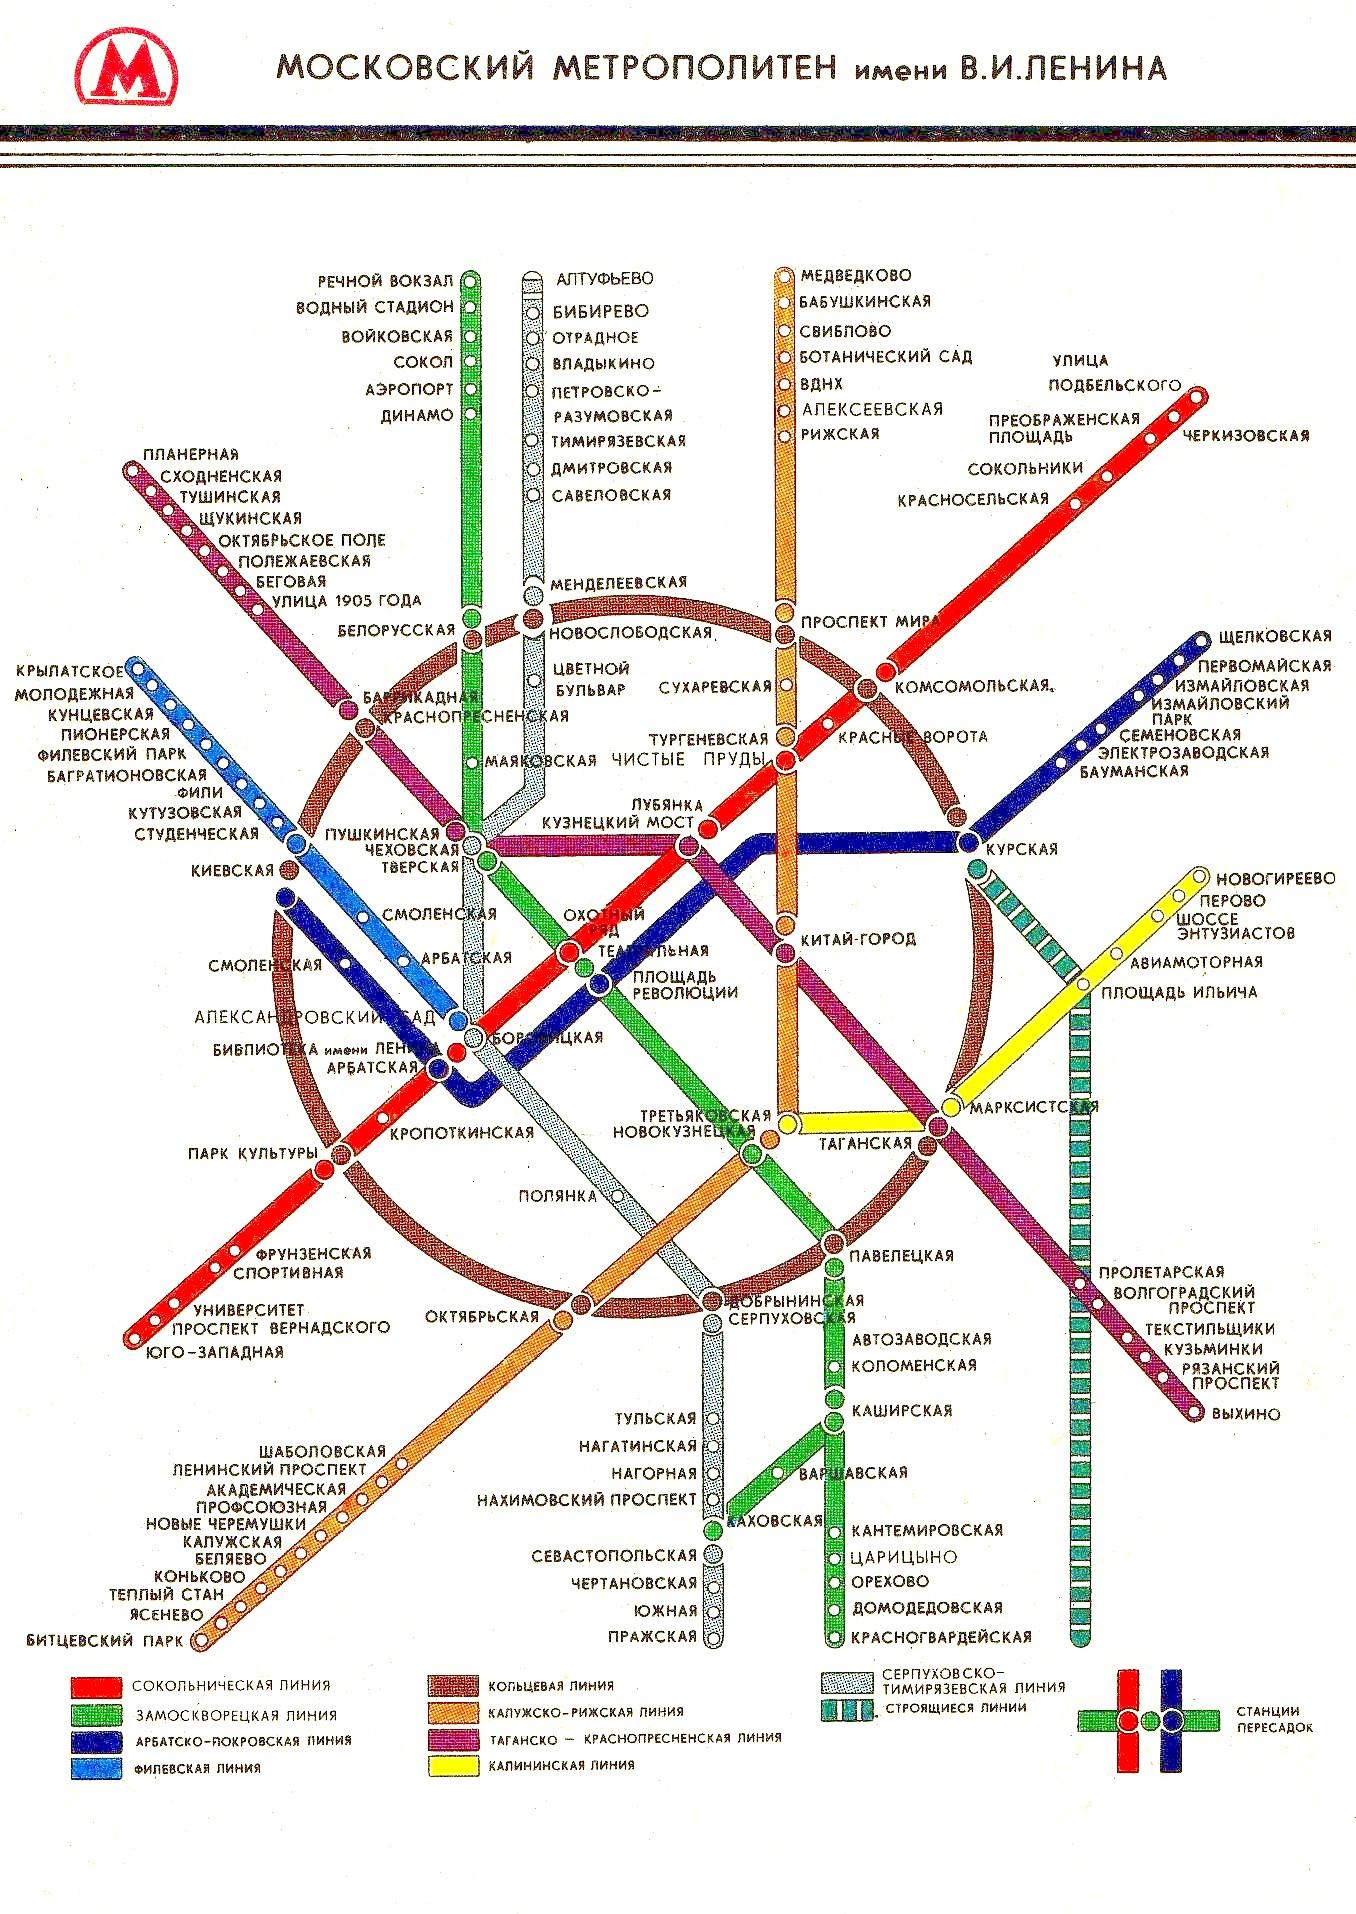 Московский метрополитен — схема линий (1993 год)